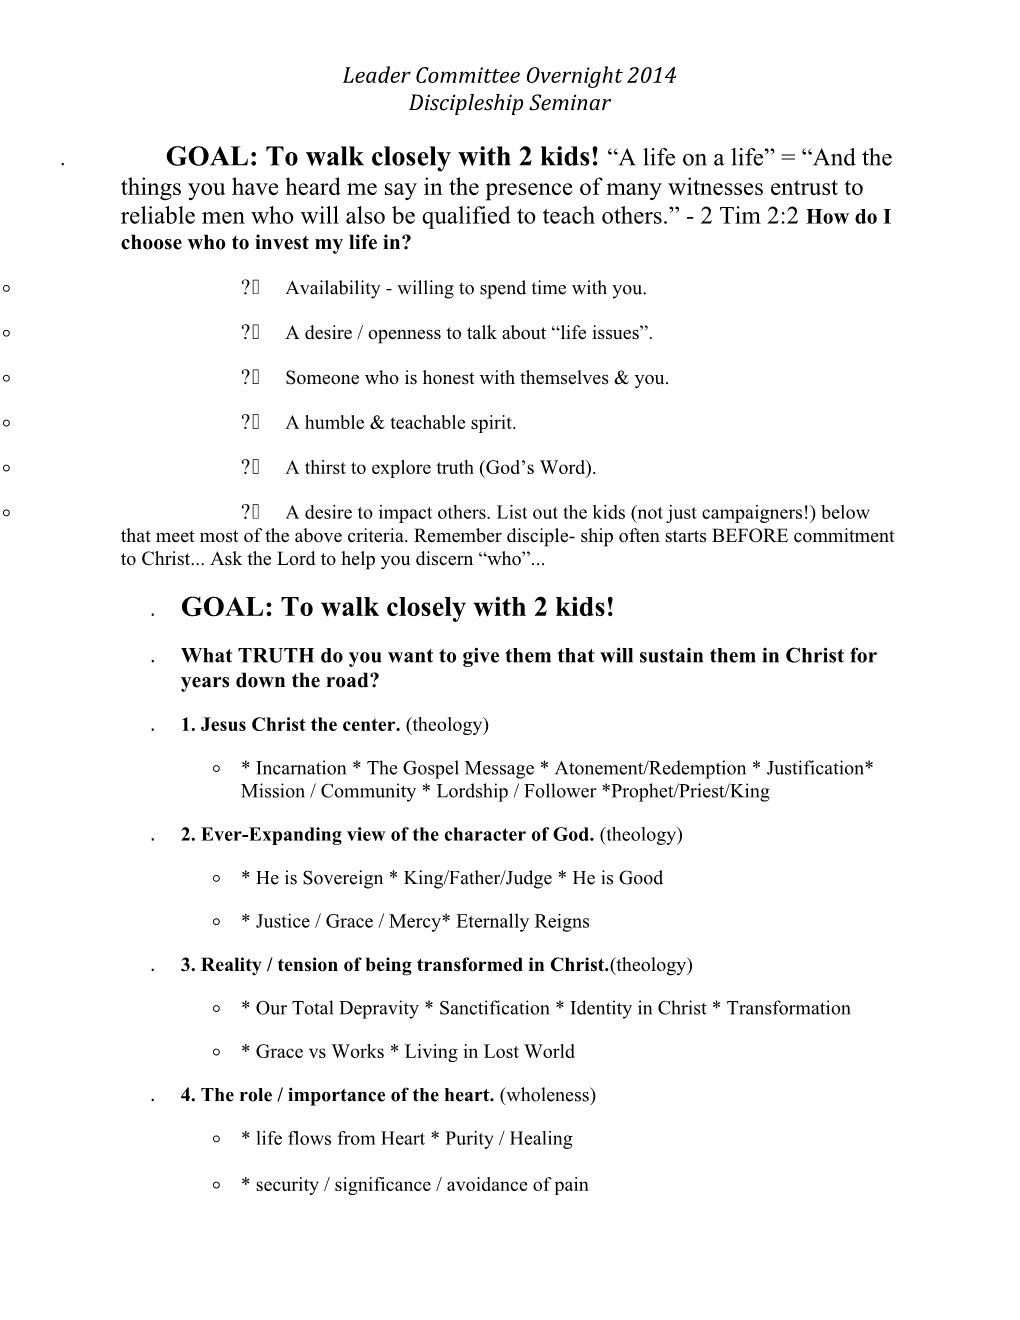 LCW2014 Discipleship Seminar Handout